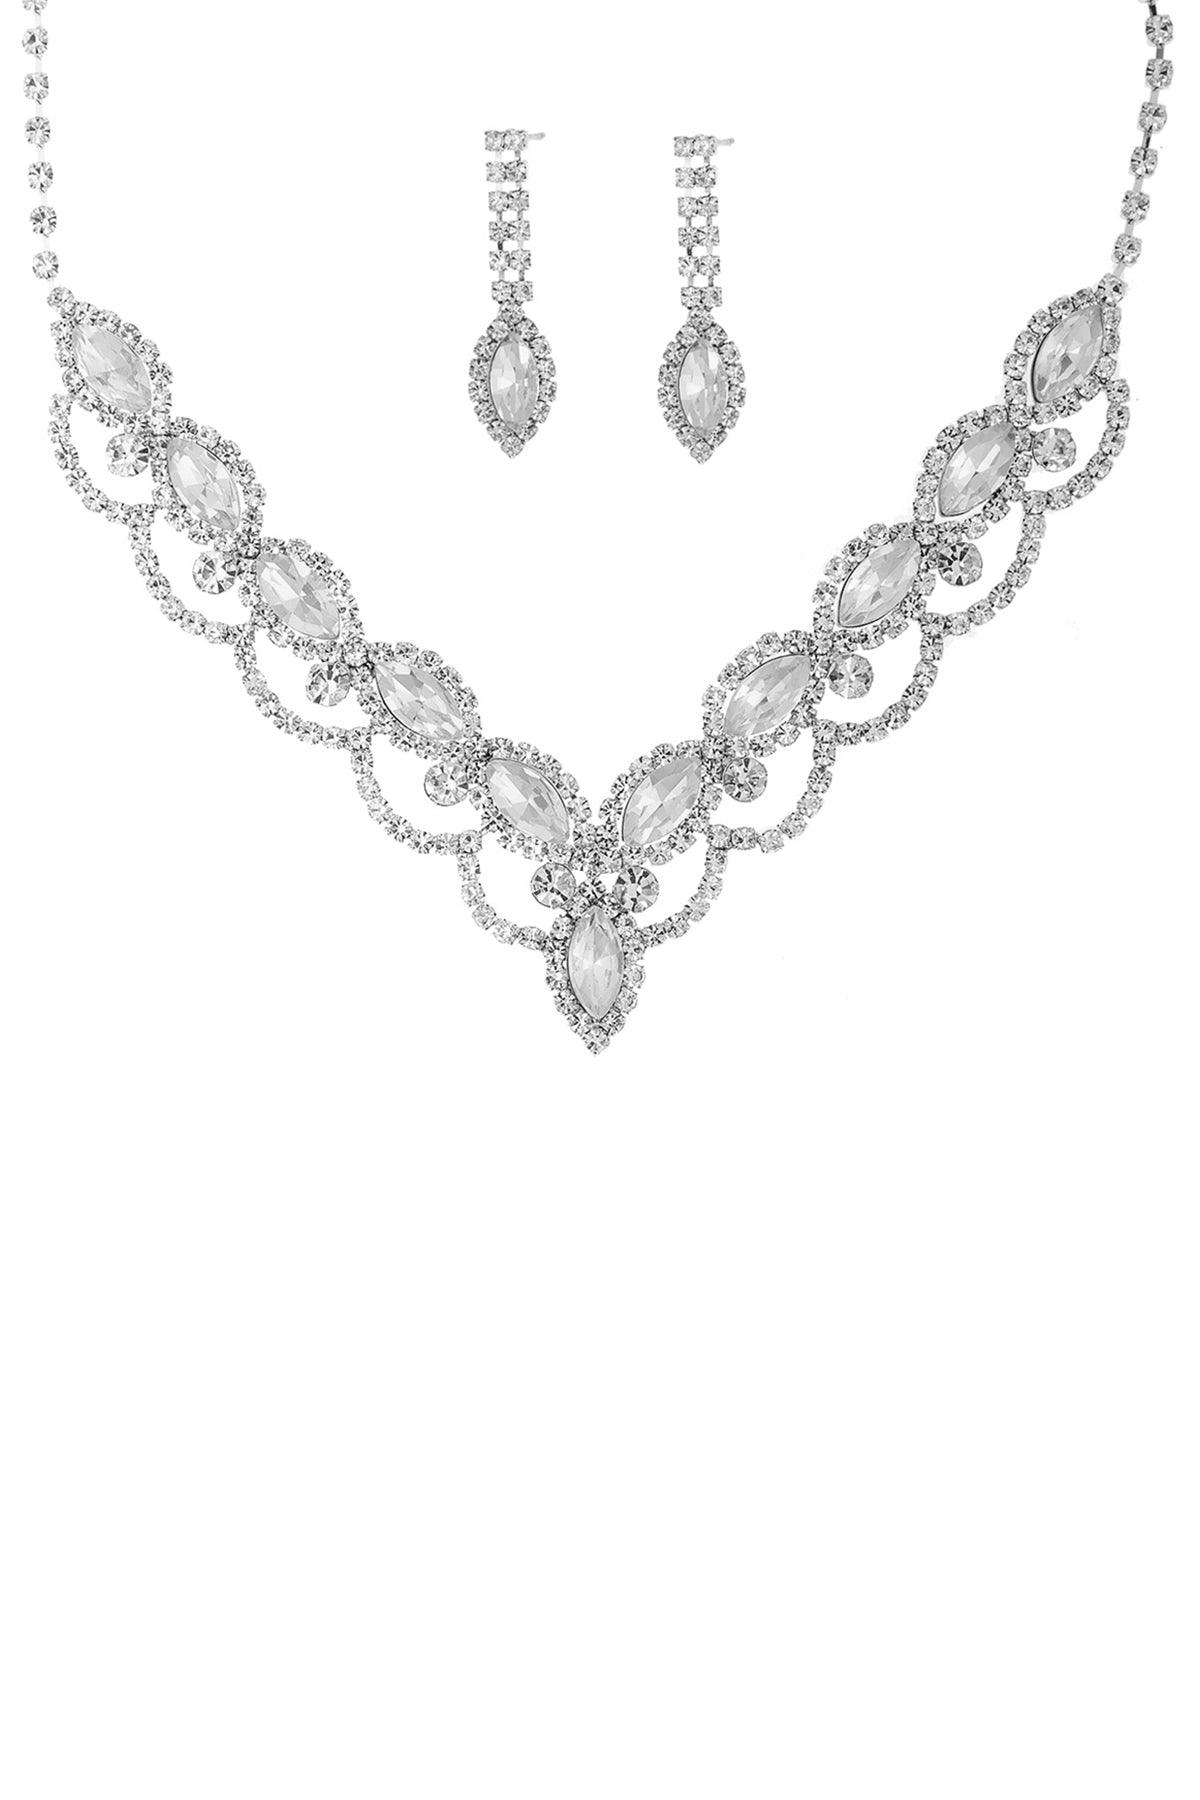 Rhinestone Teardrop V Shape Necklace And Earring Set Naughty Smile Fashion